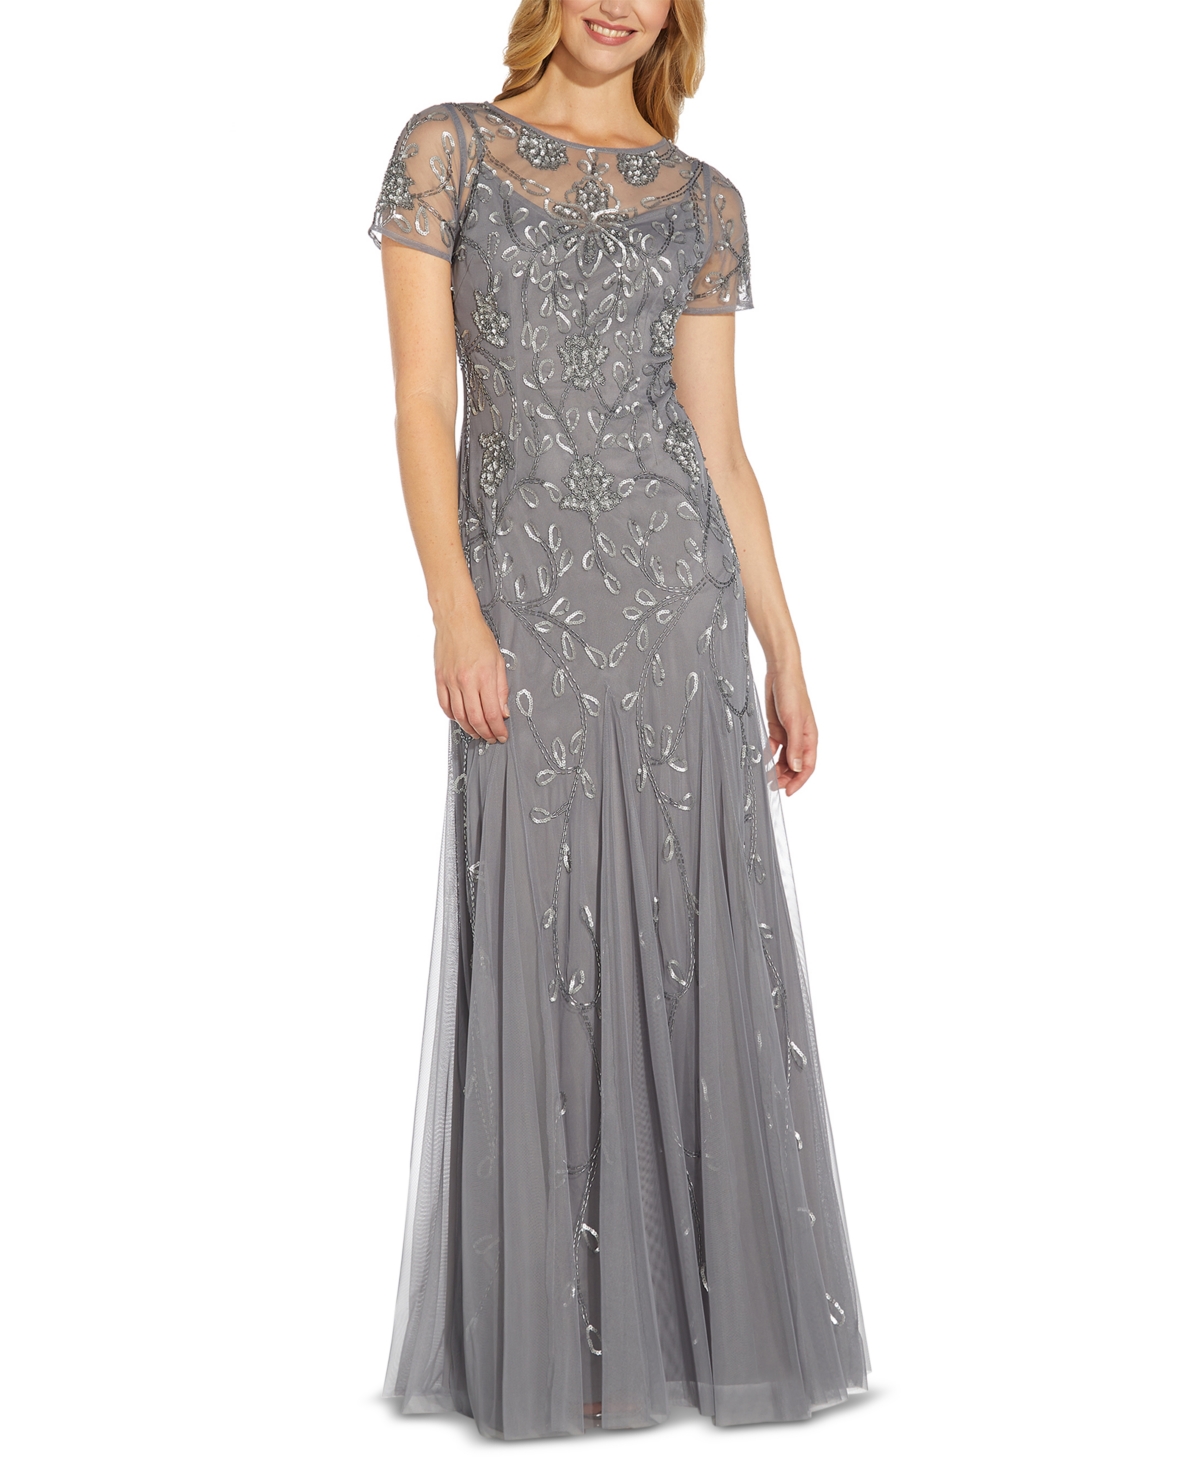 Vintage Evening Dresses Adrianna Papell Beaded Gown $279.00 AT vintagedancer.com